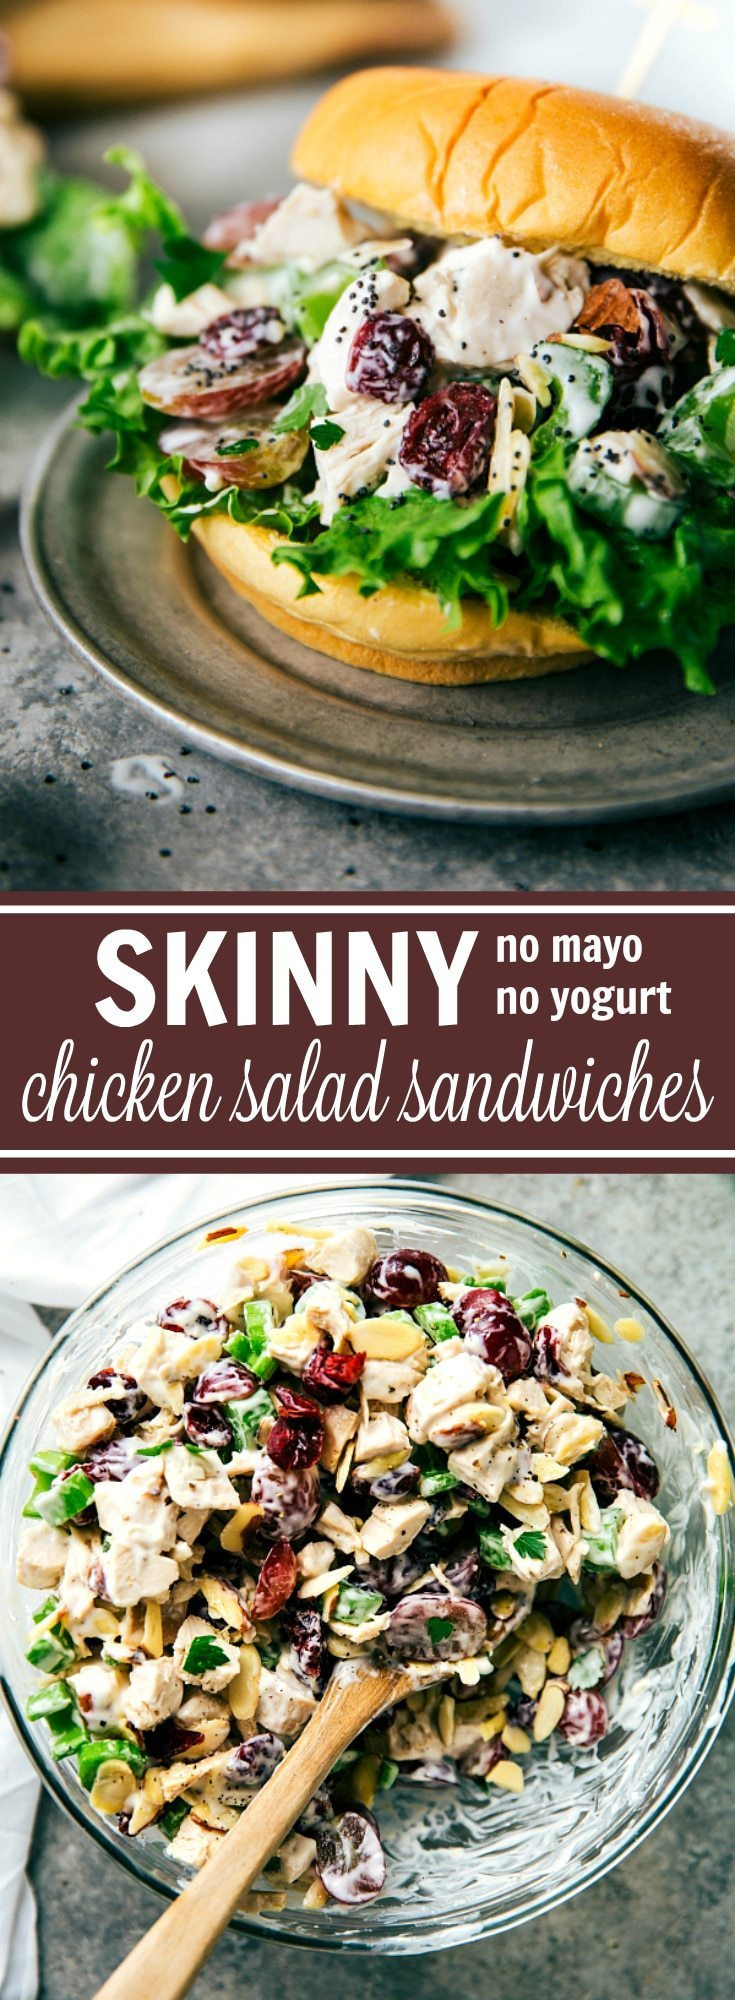 Low Calorie Chicken Salad
 Low Calorie Chicken Salad Sandwiches GIVEAWAY